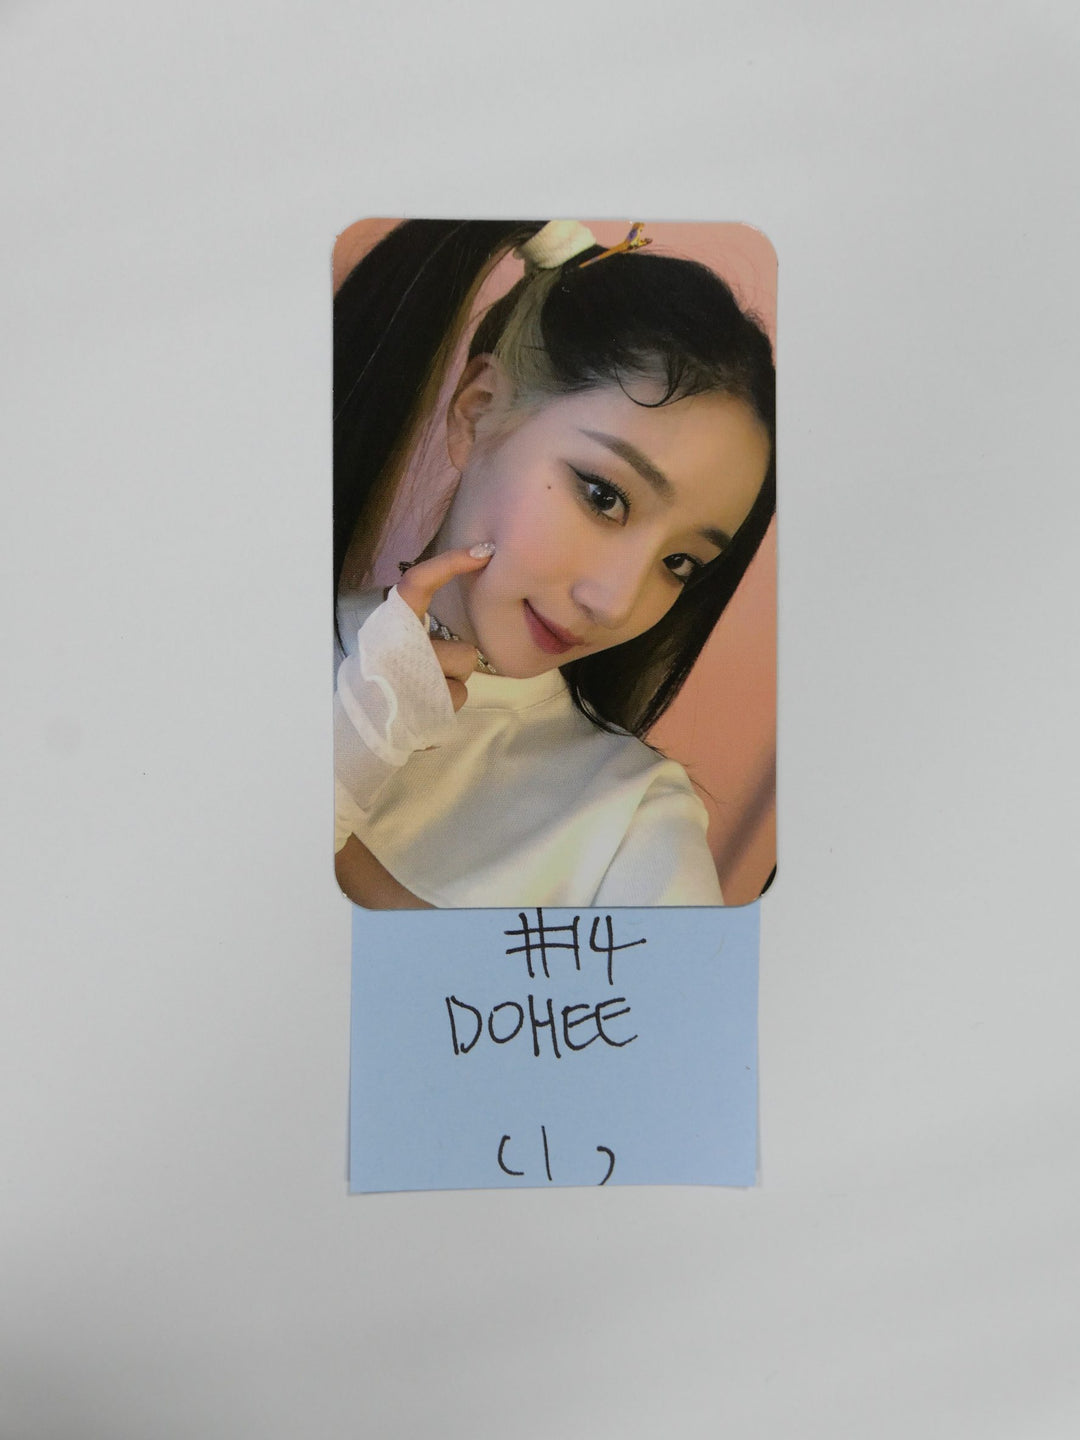 Cignature 'Dear Diary Moment' 2nd - Official Photocard